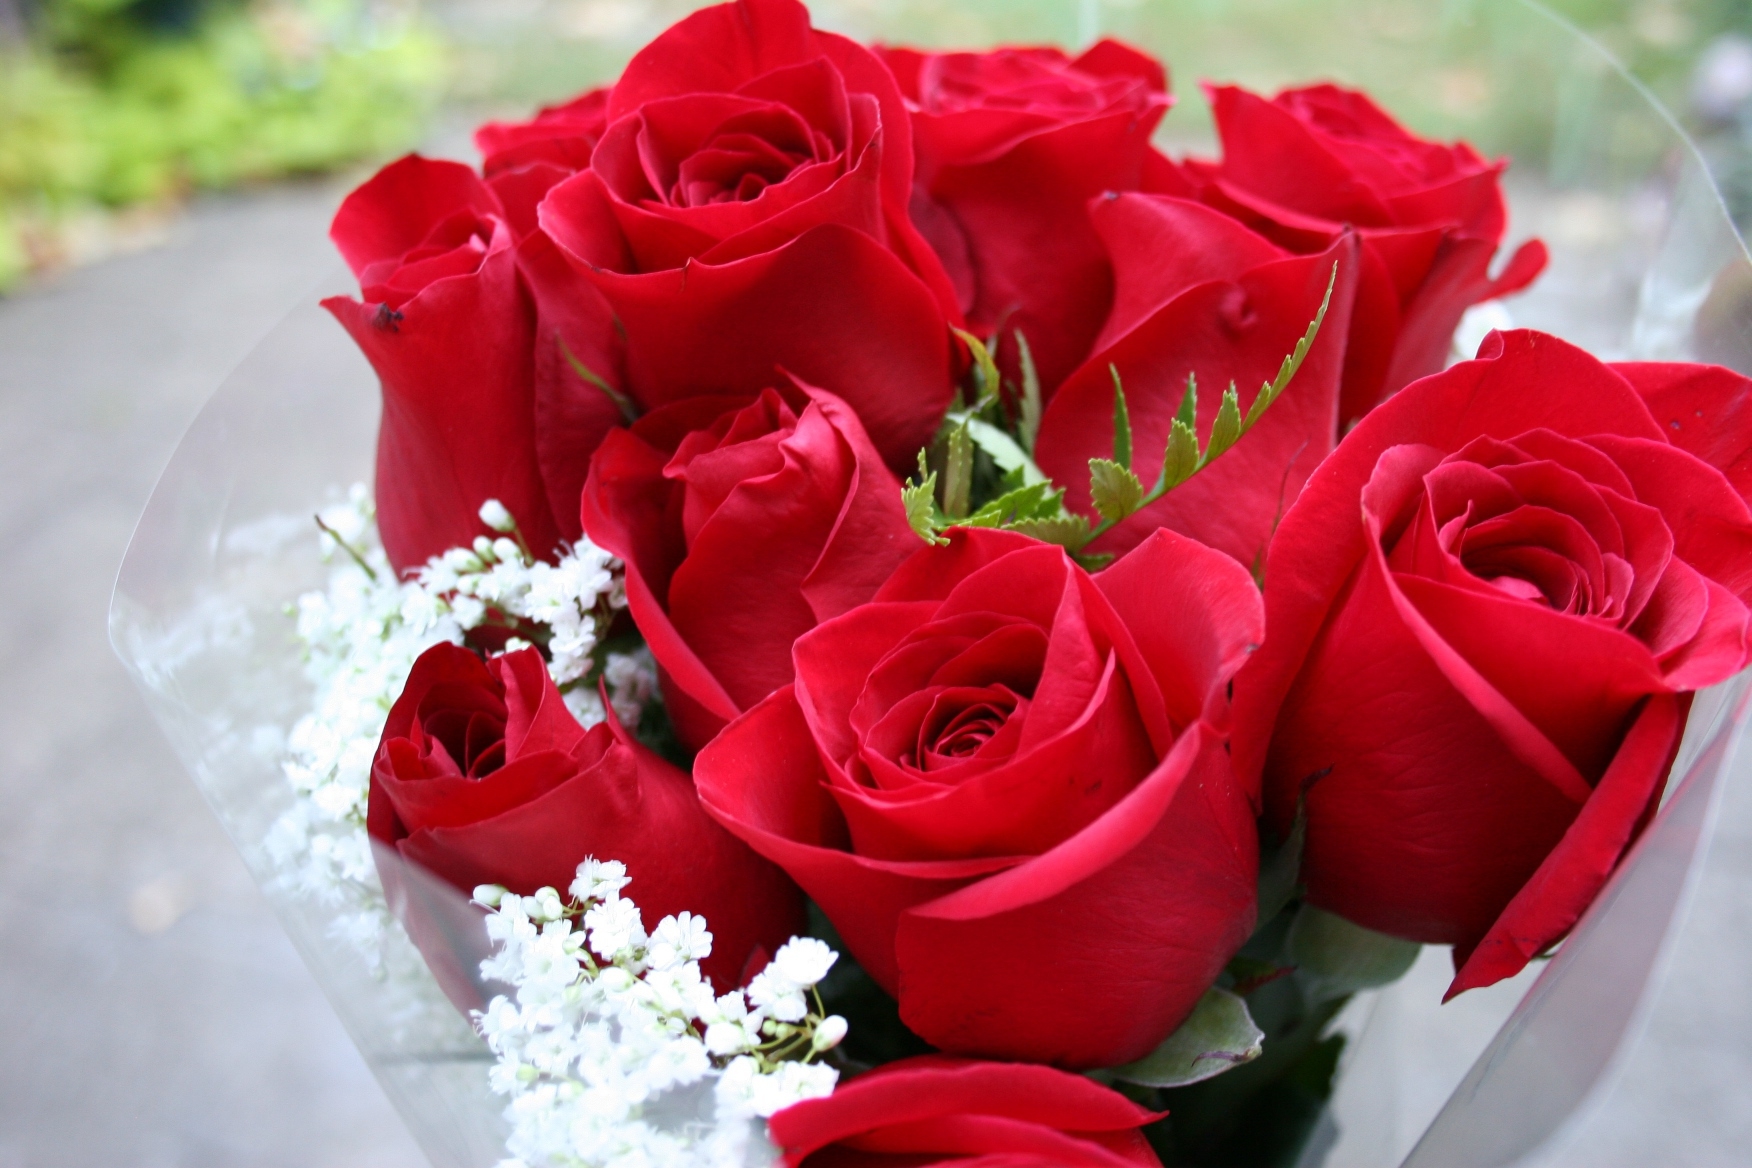 Gullar rasmi atirgul. Гулар манзараси. Шикарные цветы. Красивый букет роз. Шикарный букет роз.